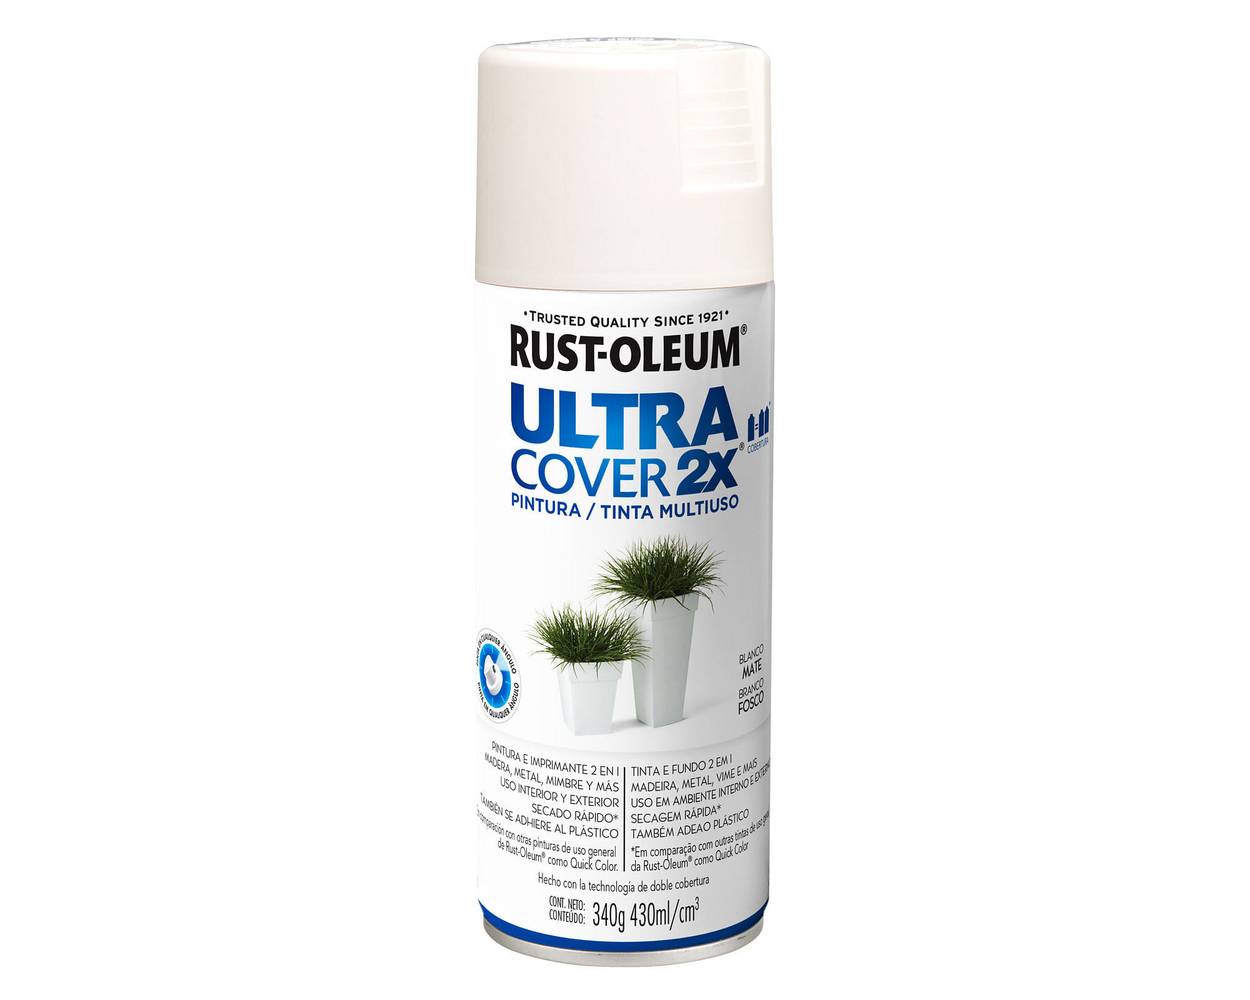 Rust oleum pintura spray ultra cover 2x blanco mate (lata 340 g)